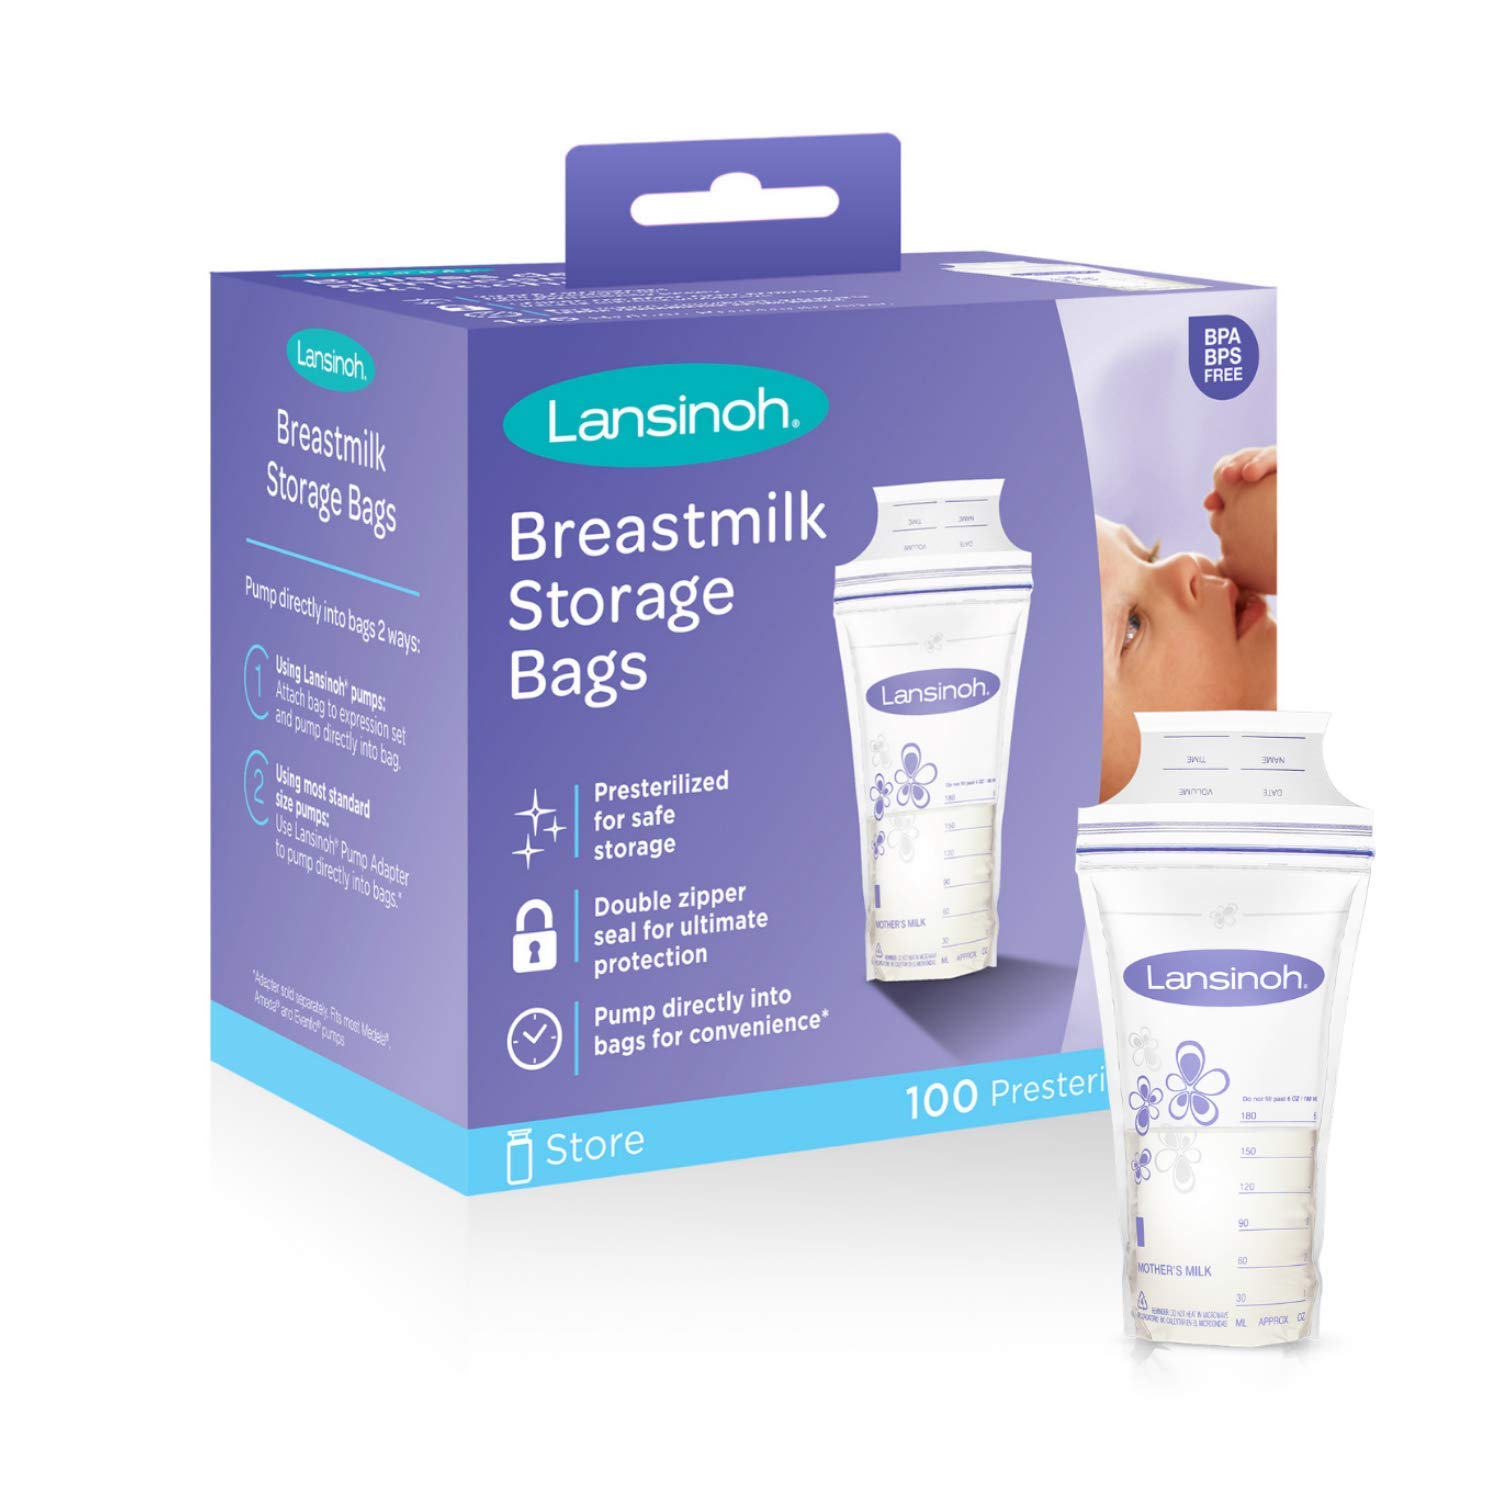 Lansinoh Breastmilk Storage Bags, 100 Count (1 Pack of 100 Bags), Milk Freezer Bags for Long Term Breastfeeding Storage, Pump Directly into Bags, Nursing Essentials